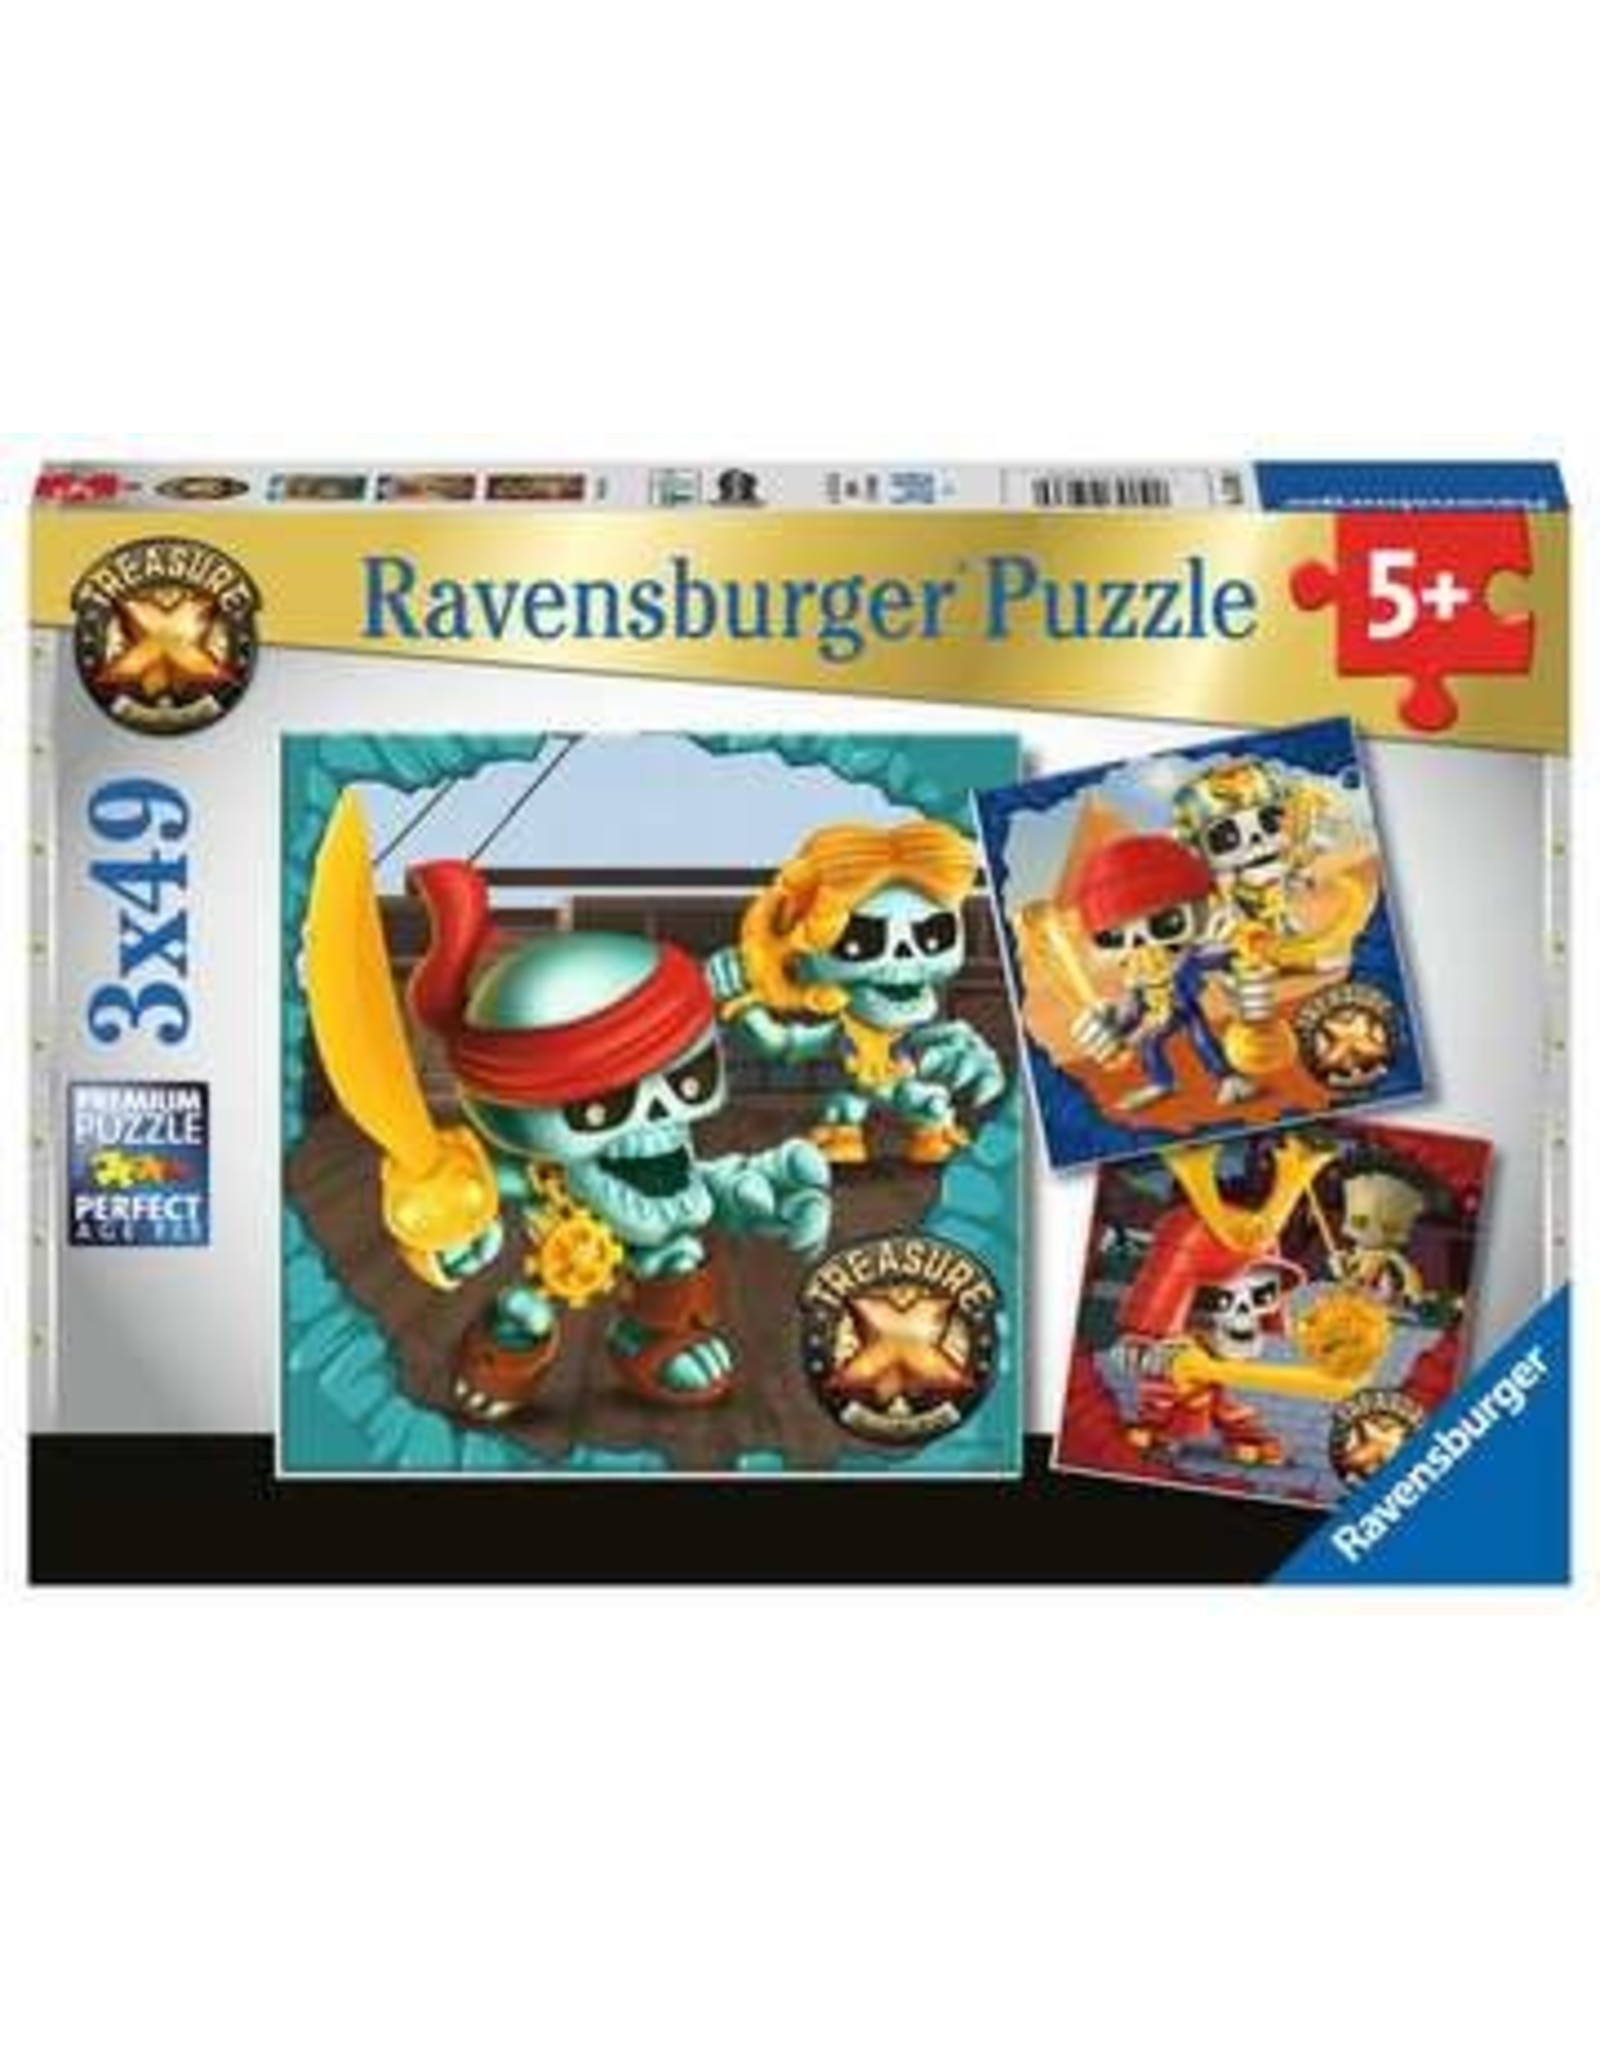 Ravensburger Puzzle Ravensburger 3x49 licence: treasure x